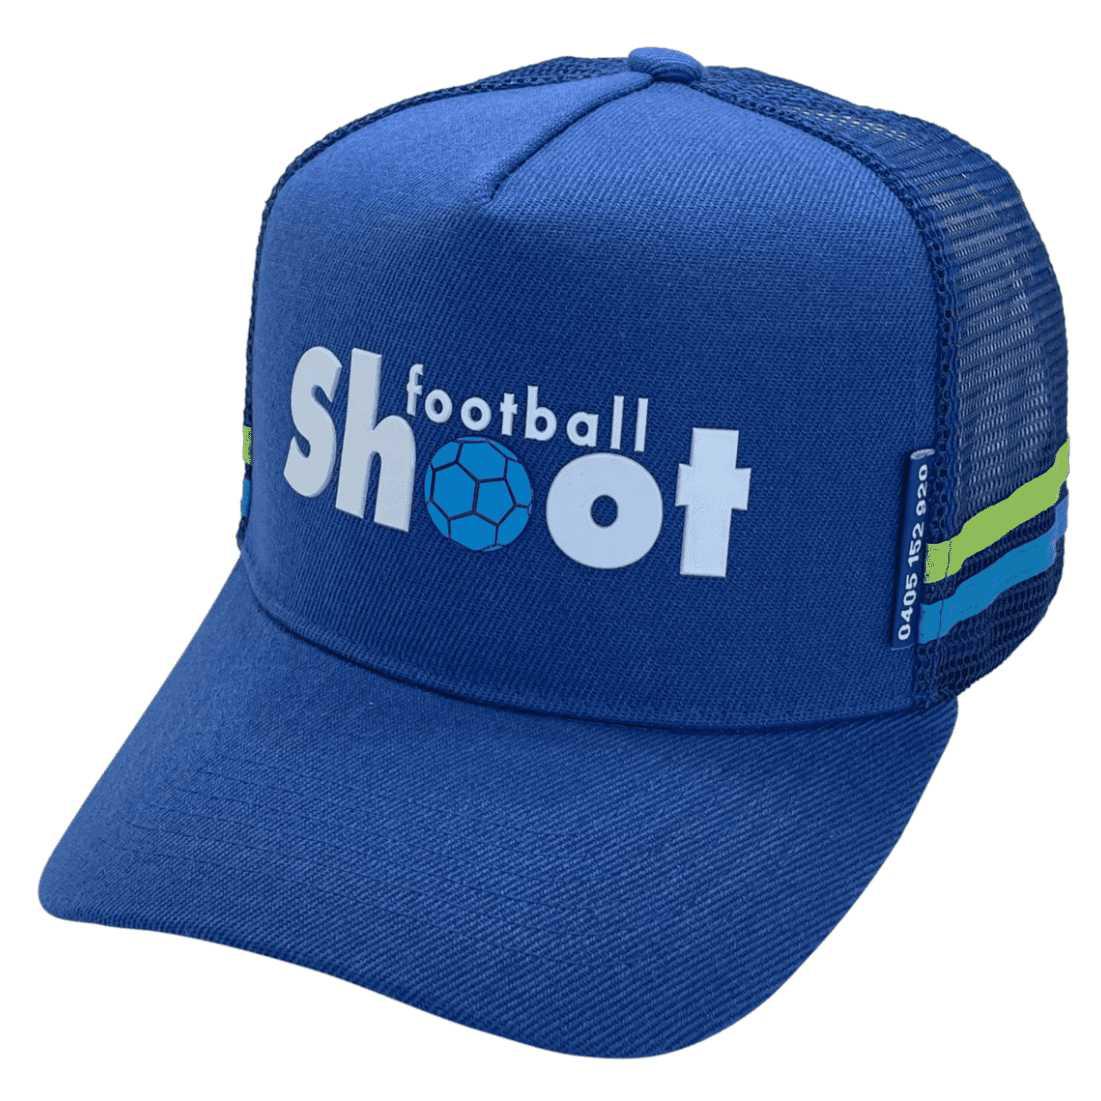 Shoot Football Port Macquarie NSW HP Original Basic Aussie Trucker Hats with Australian Youth Head Fit crown